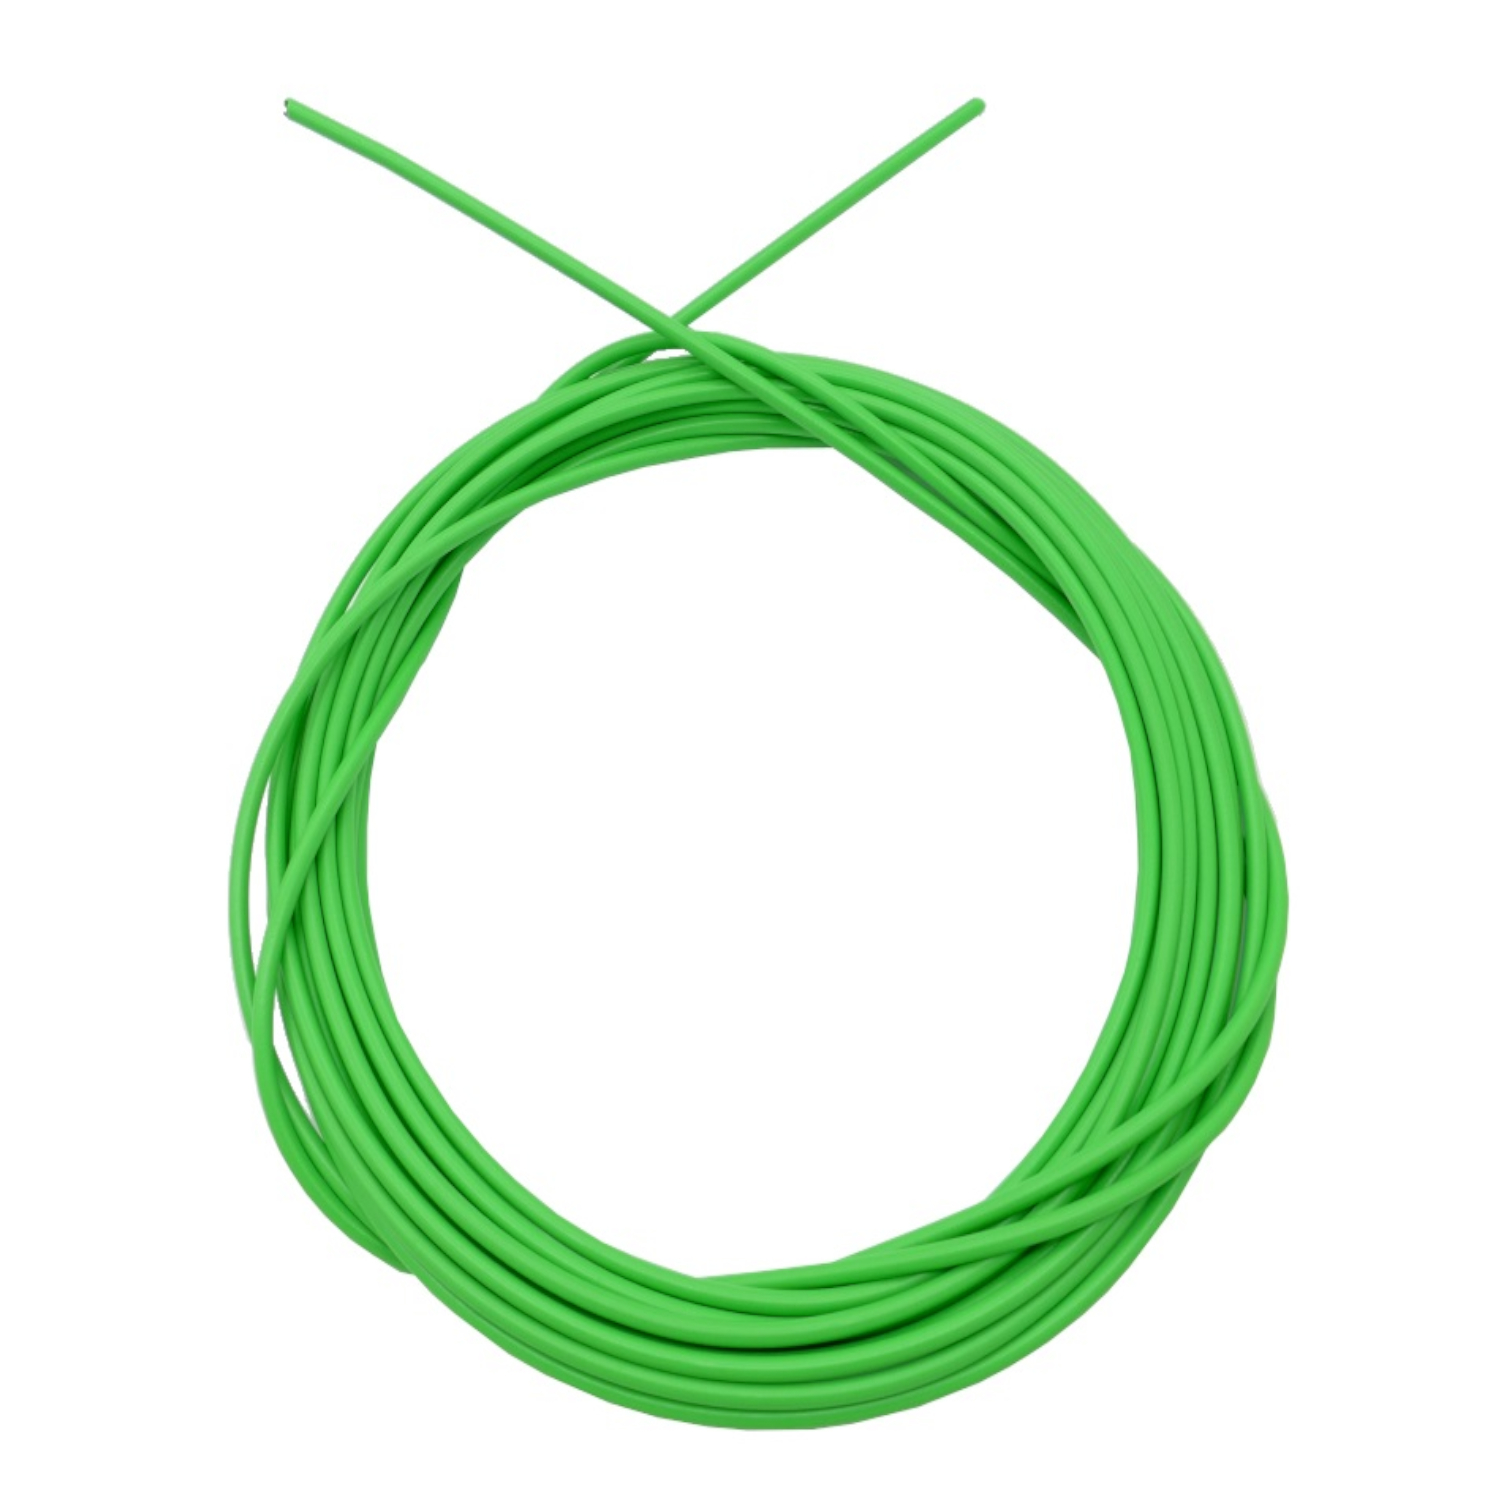 BREMS-Hülle 10 m-Rolle-DTFLG50010 in neon grün, mit PE-HD-Innenliner